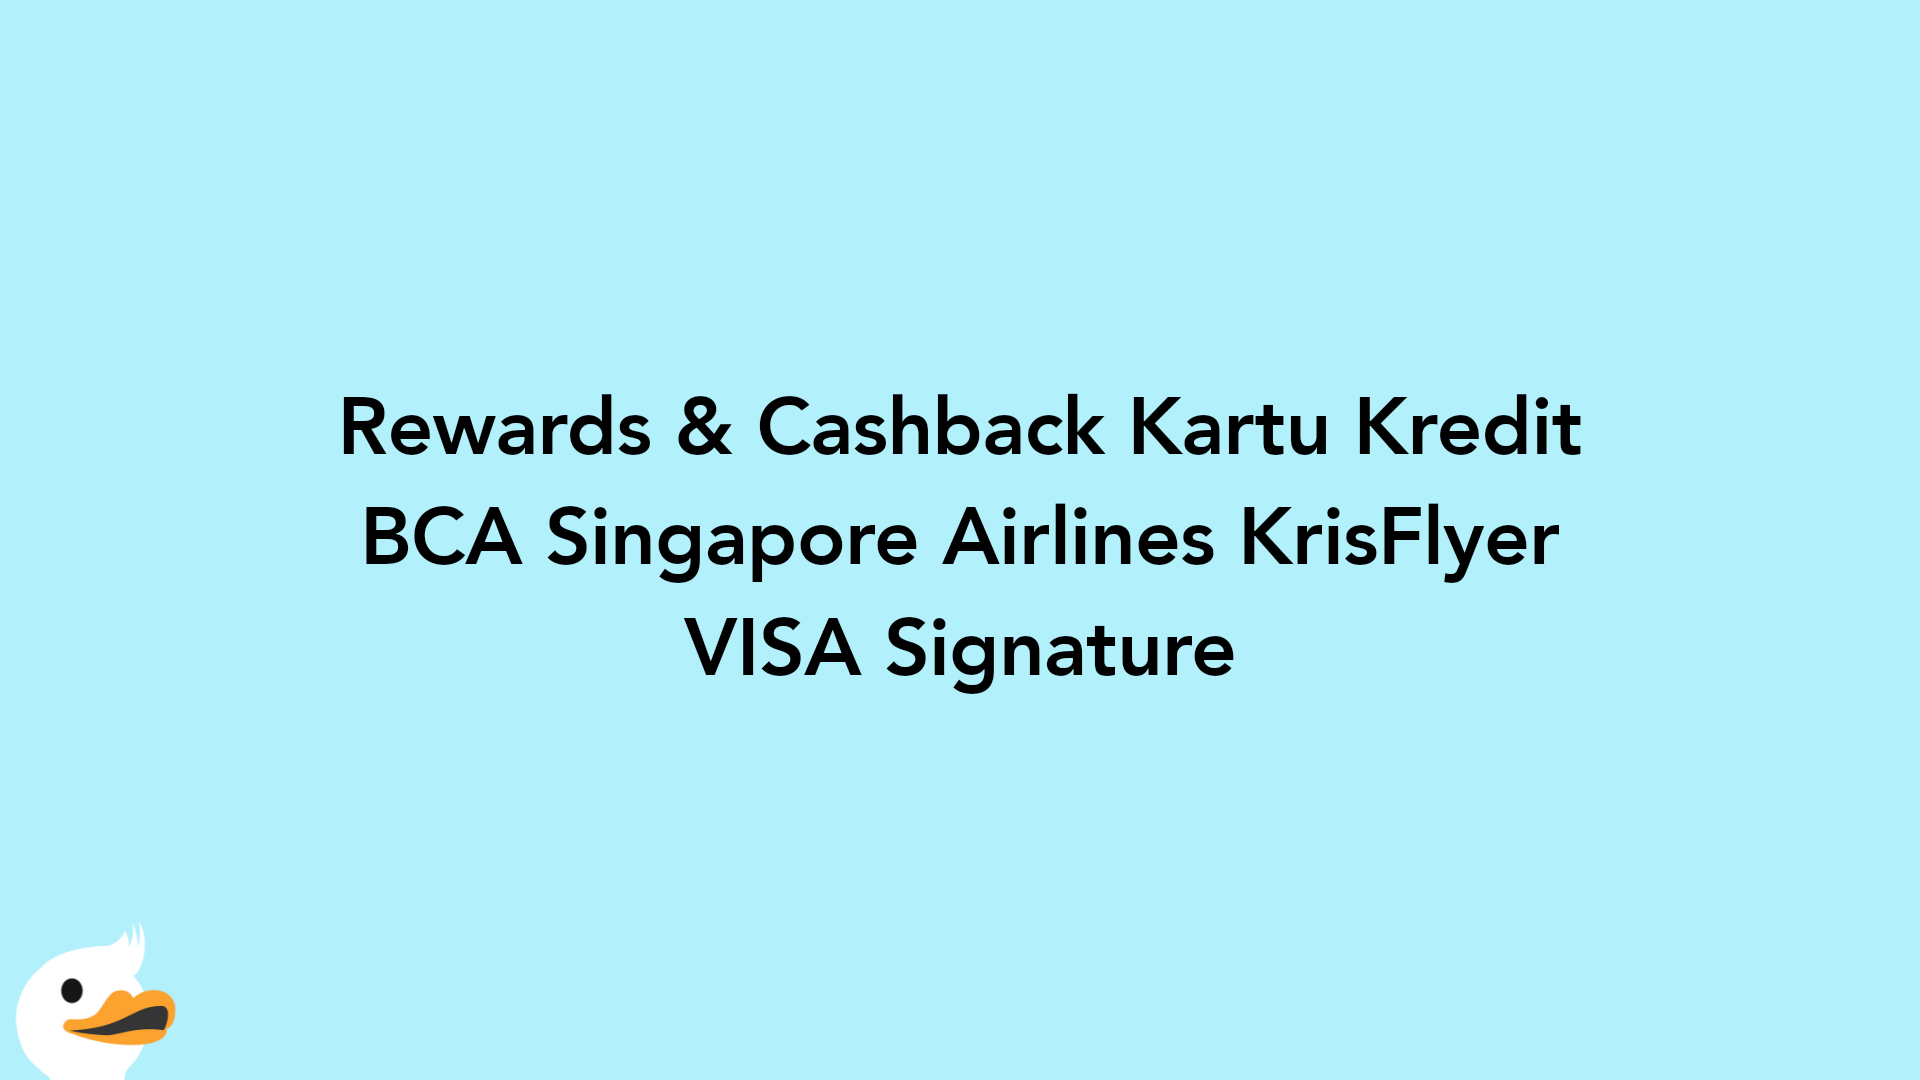 Rewards & Cashback Kartu Kredit BCA Singapore Airlines KrisFlyer VISA Signature